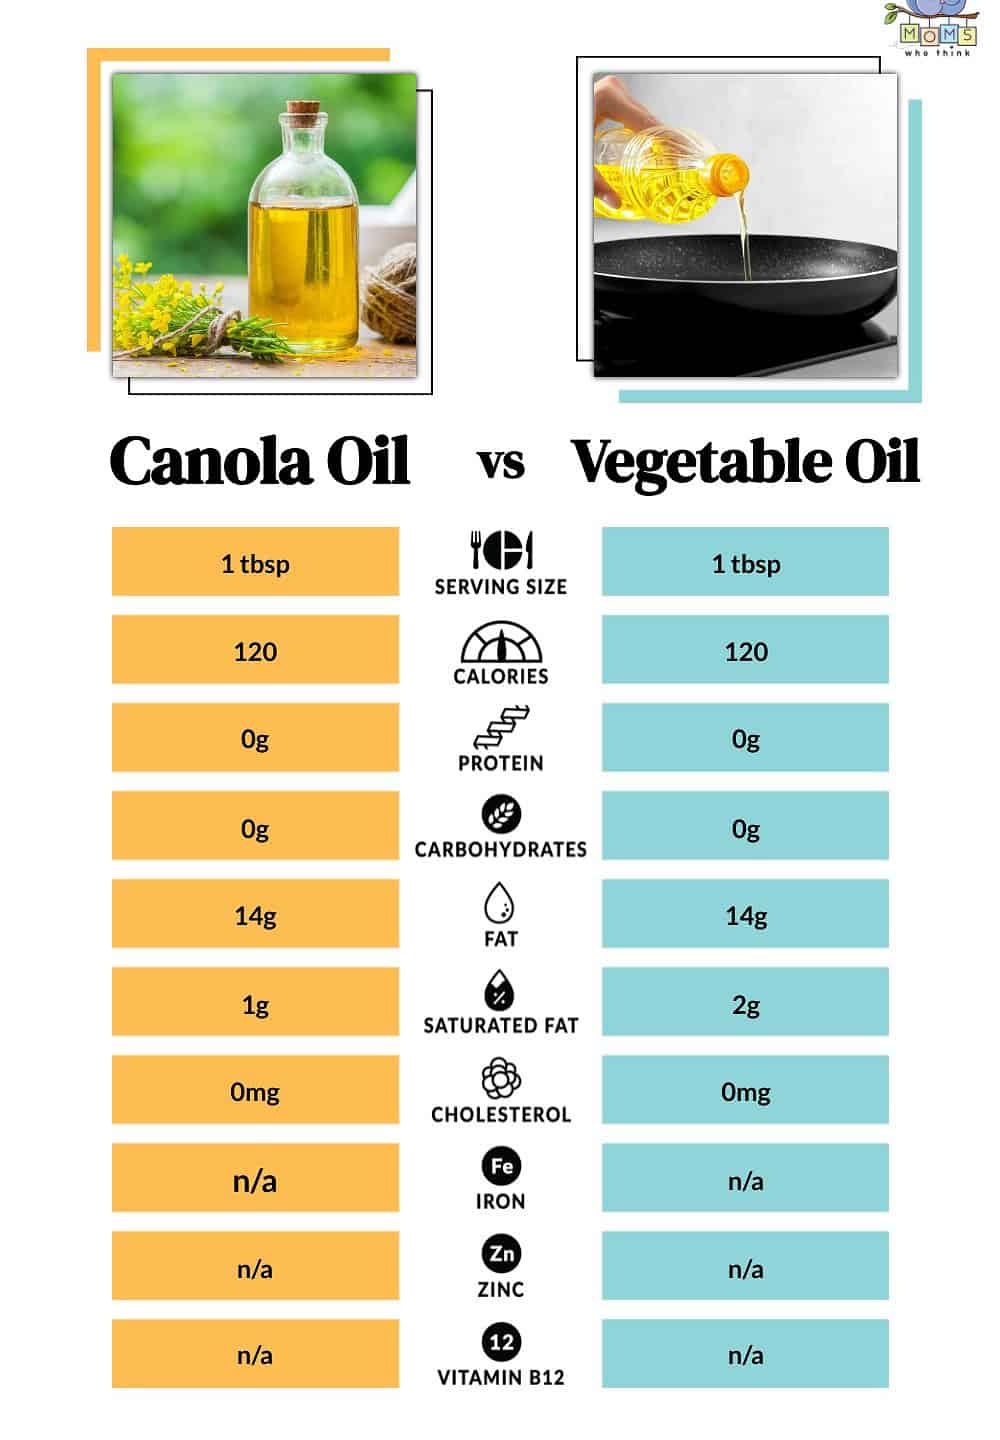 Canola Oil vs Vegetable Oil Nutritional Facts